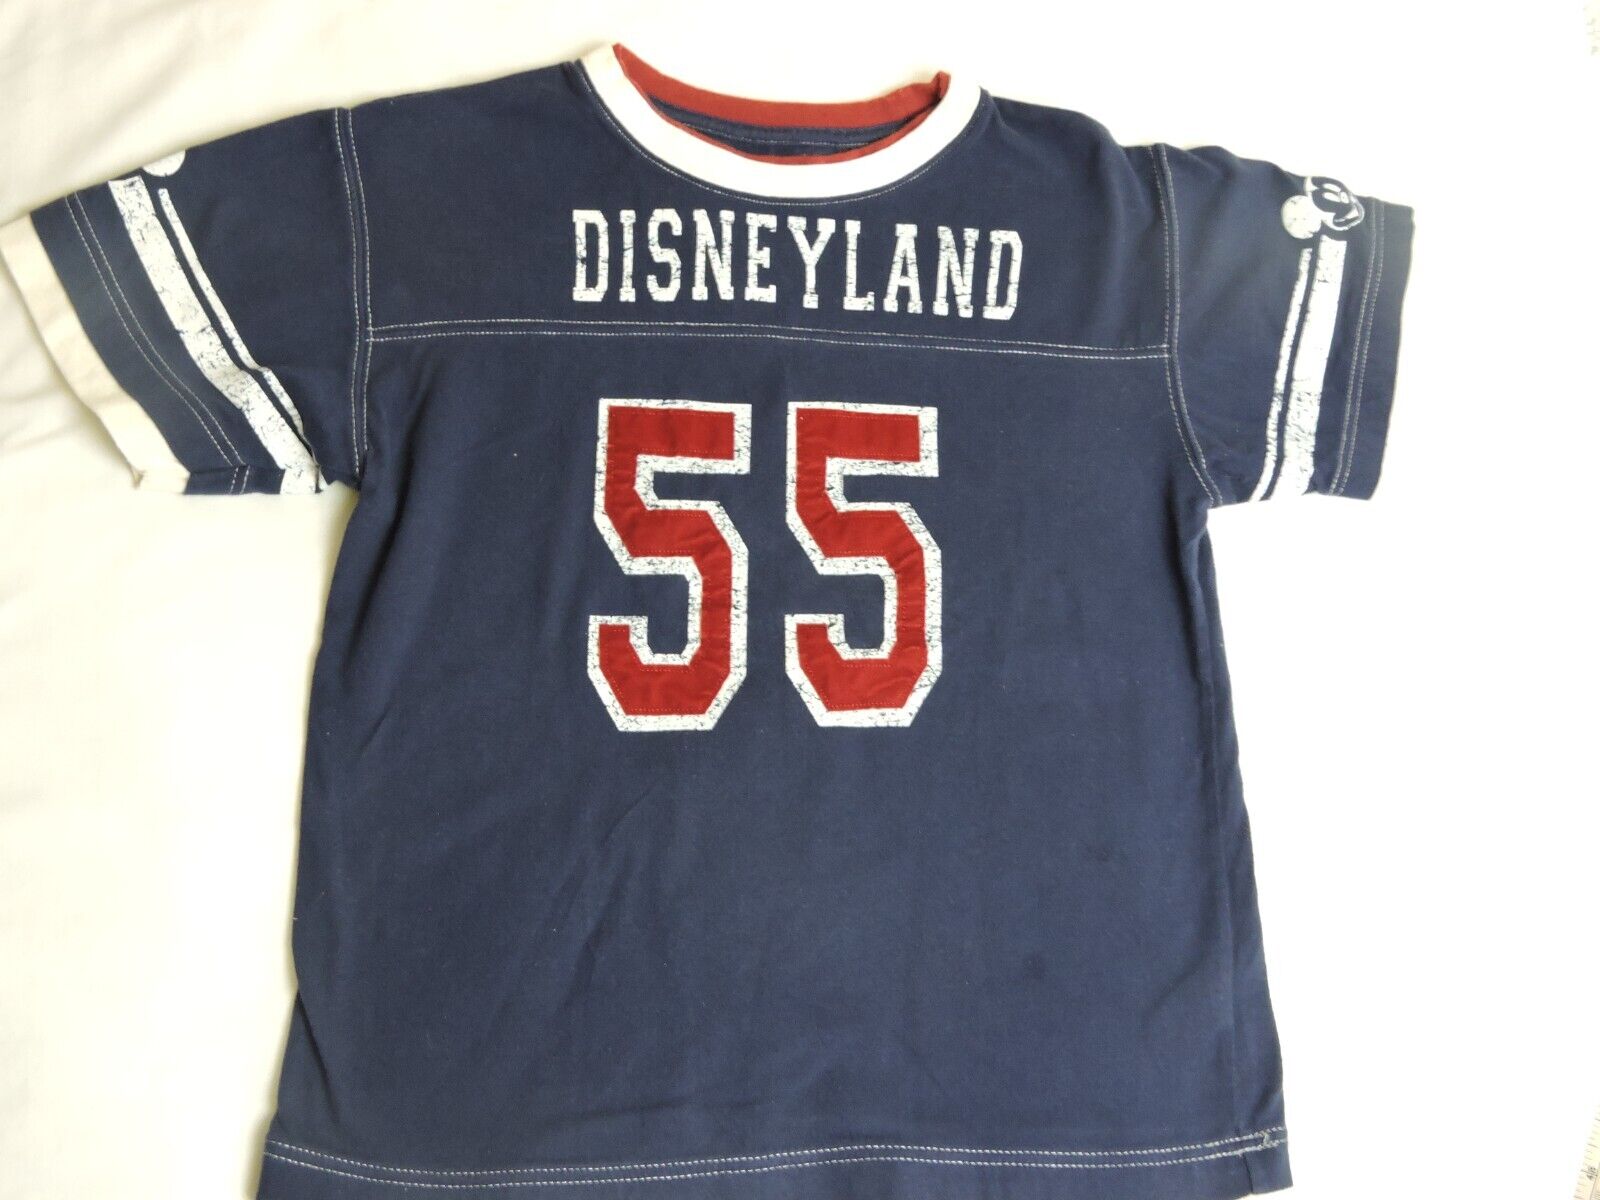 Disney Resort 55 1955 T-Shirt Adult L Short Sleeve Blue Red Mickey Disneyland